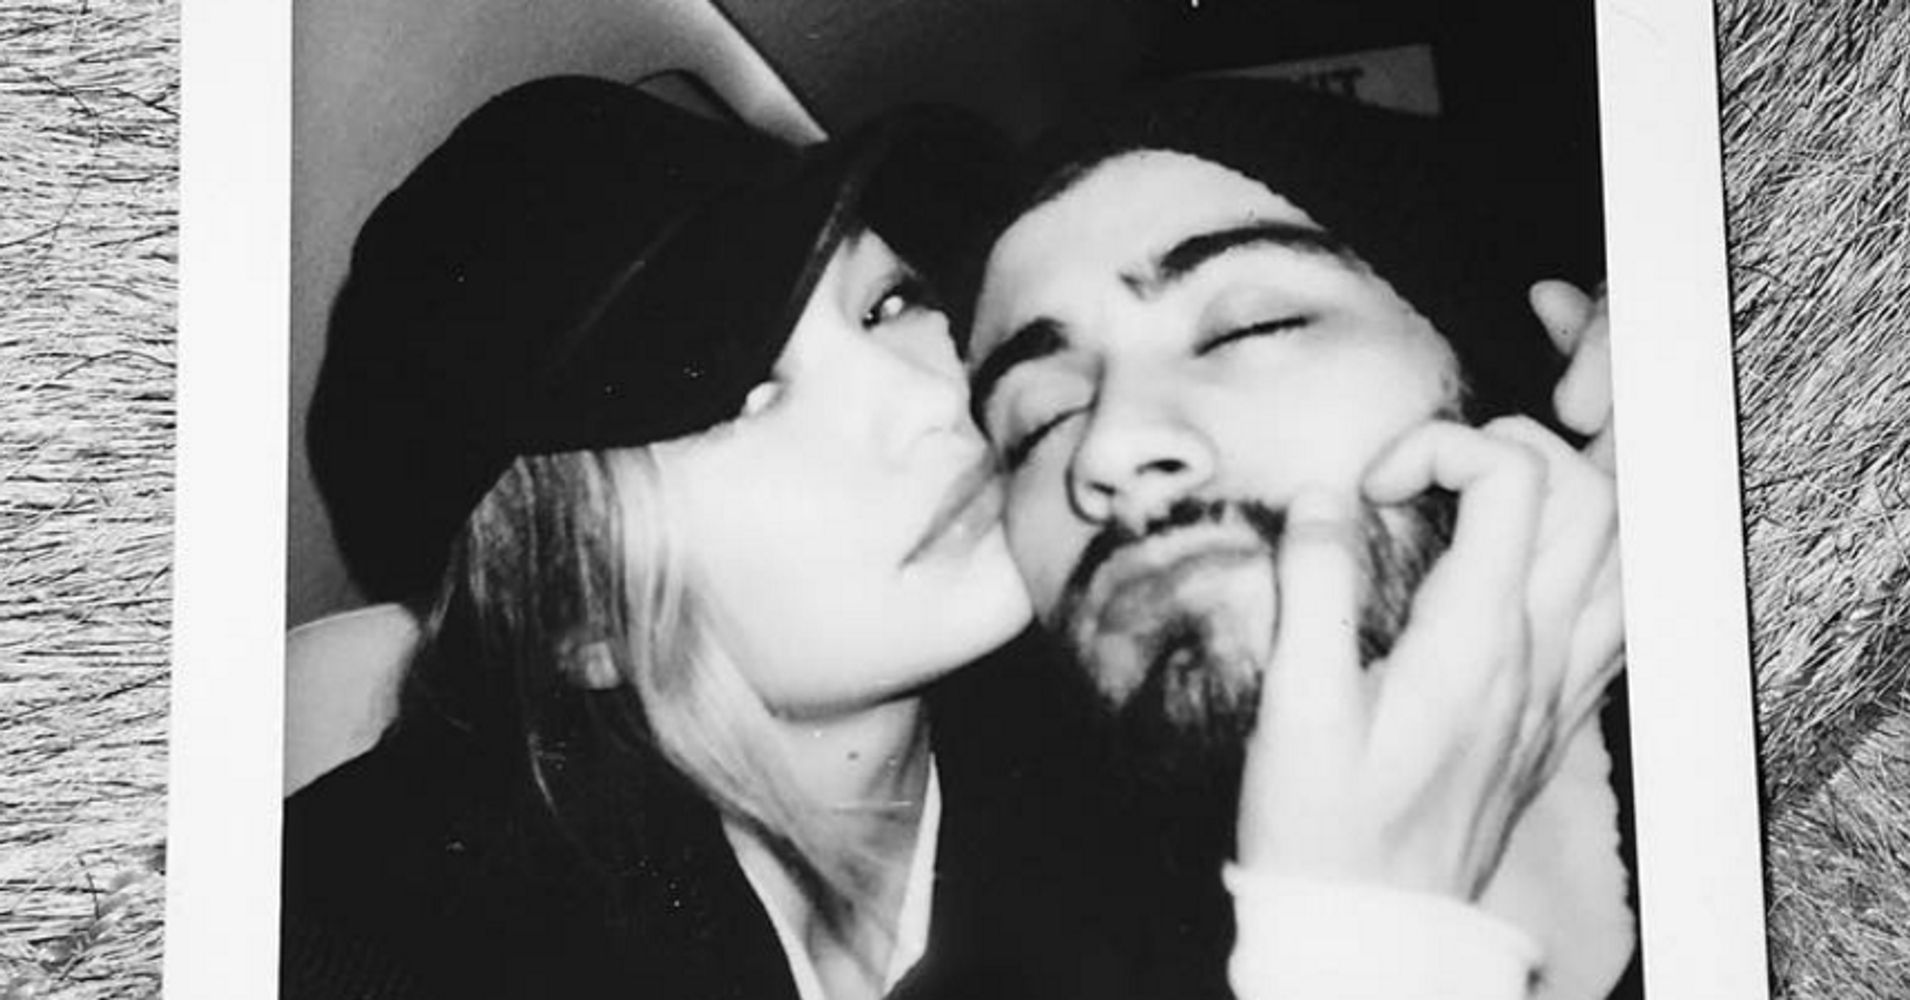 Gigi Hadid And Zayn Malik Fuel Relationship Rumors On Instagram | HuffPost